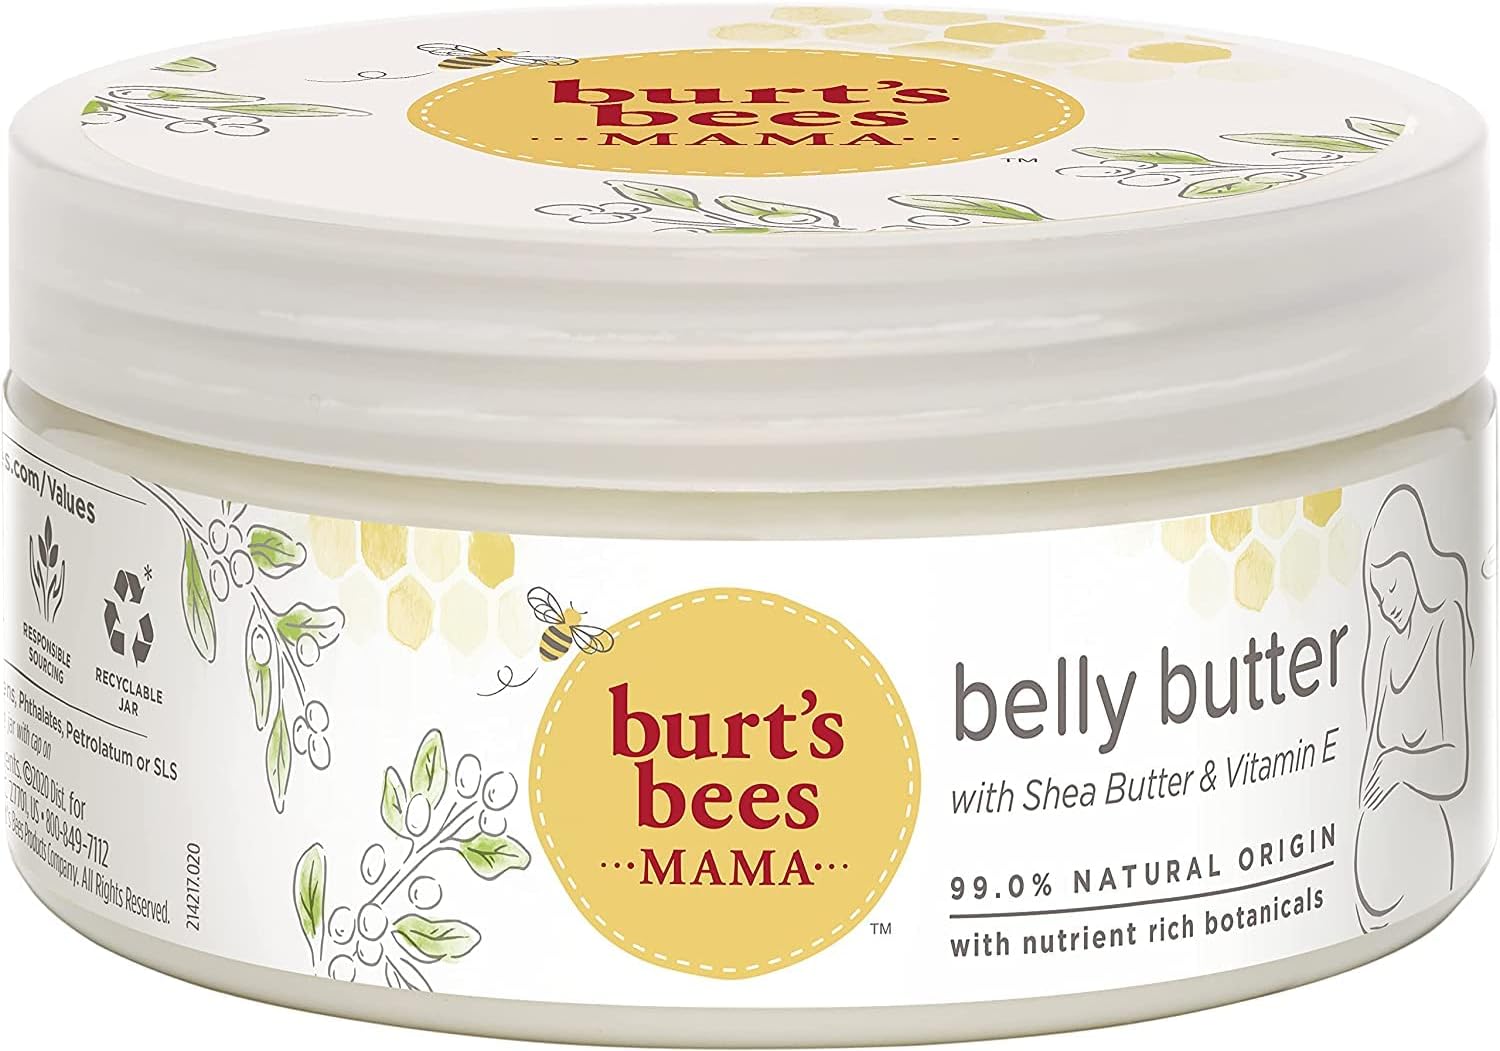 Belly Butter Mama Bee Burt's Bees 520101 185g 01031-14